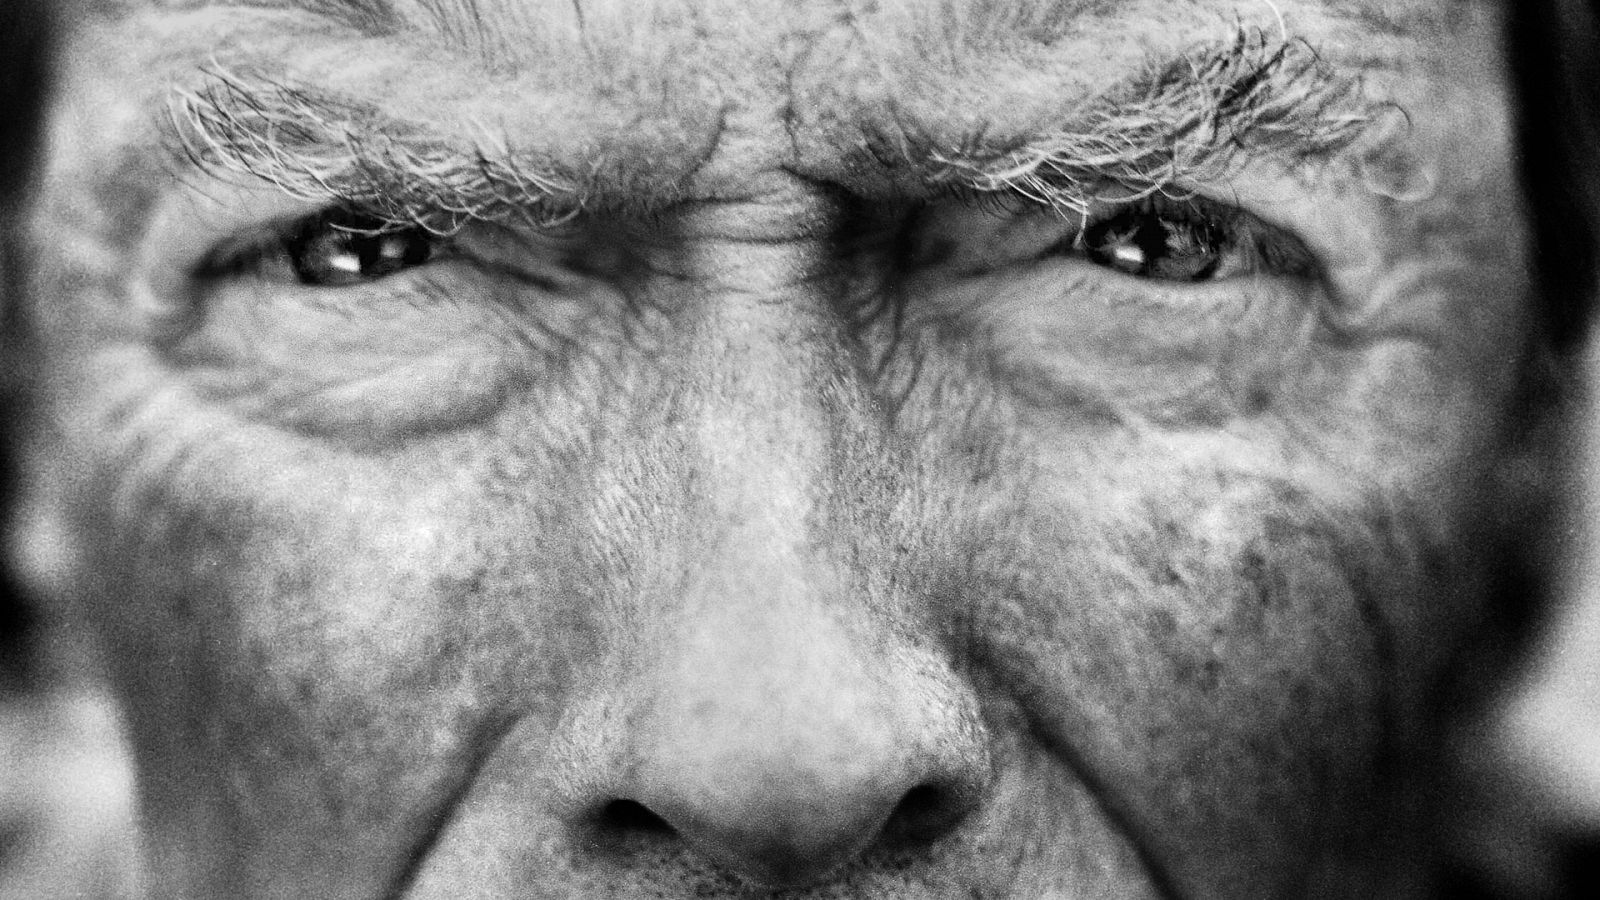 Somos documentales - Clint Eastwood, el francotirador - Documental en RTVE